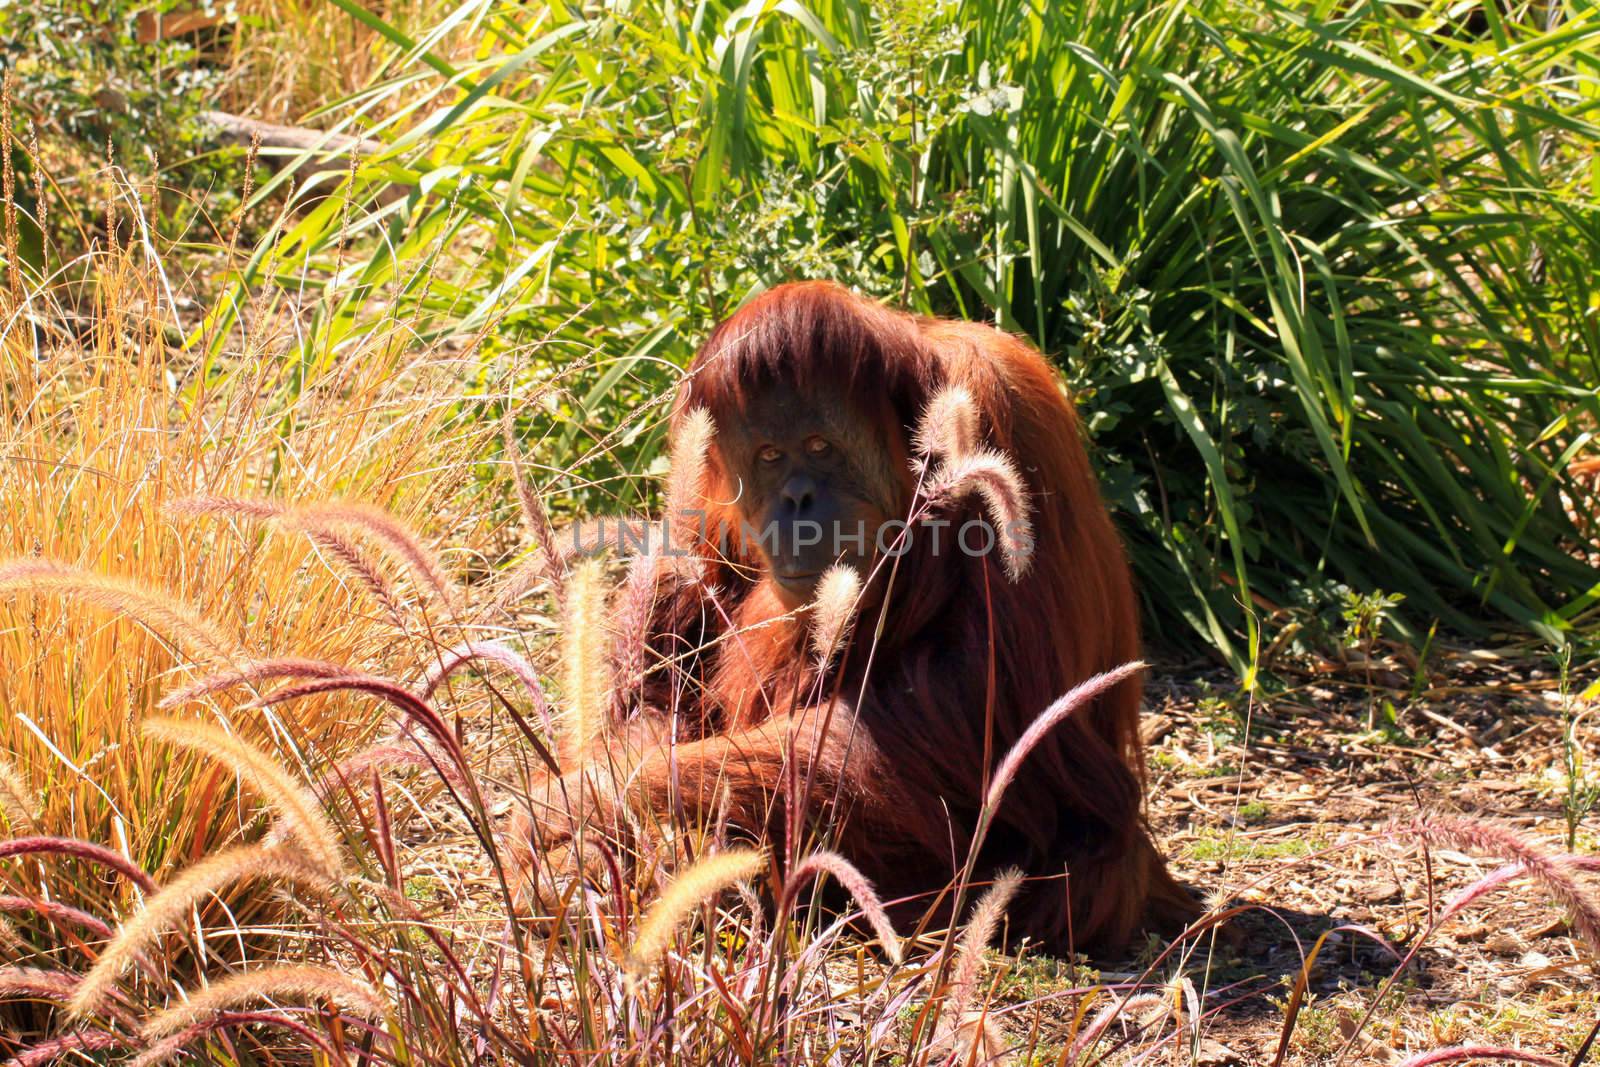 Sumatran Orangutan camouflaged by grasses. Adelaide Zoo, Adelaide, Australia